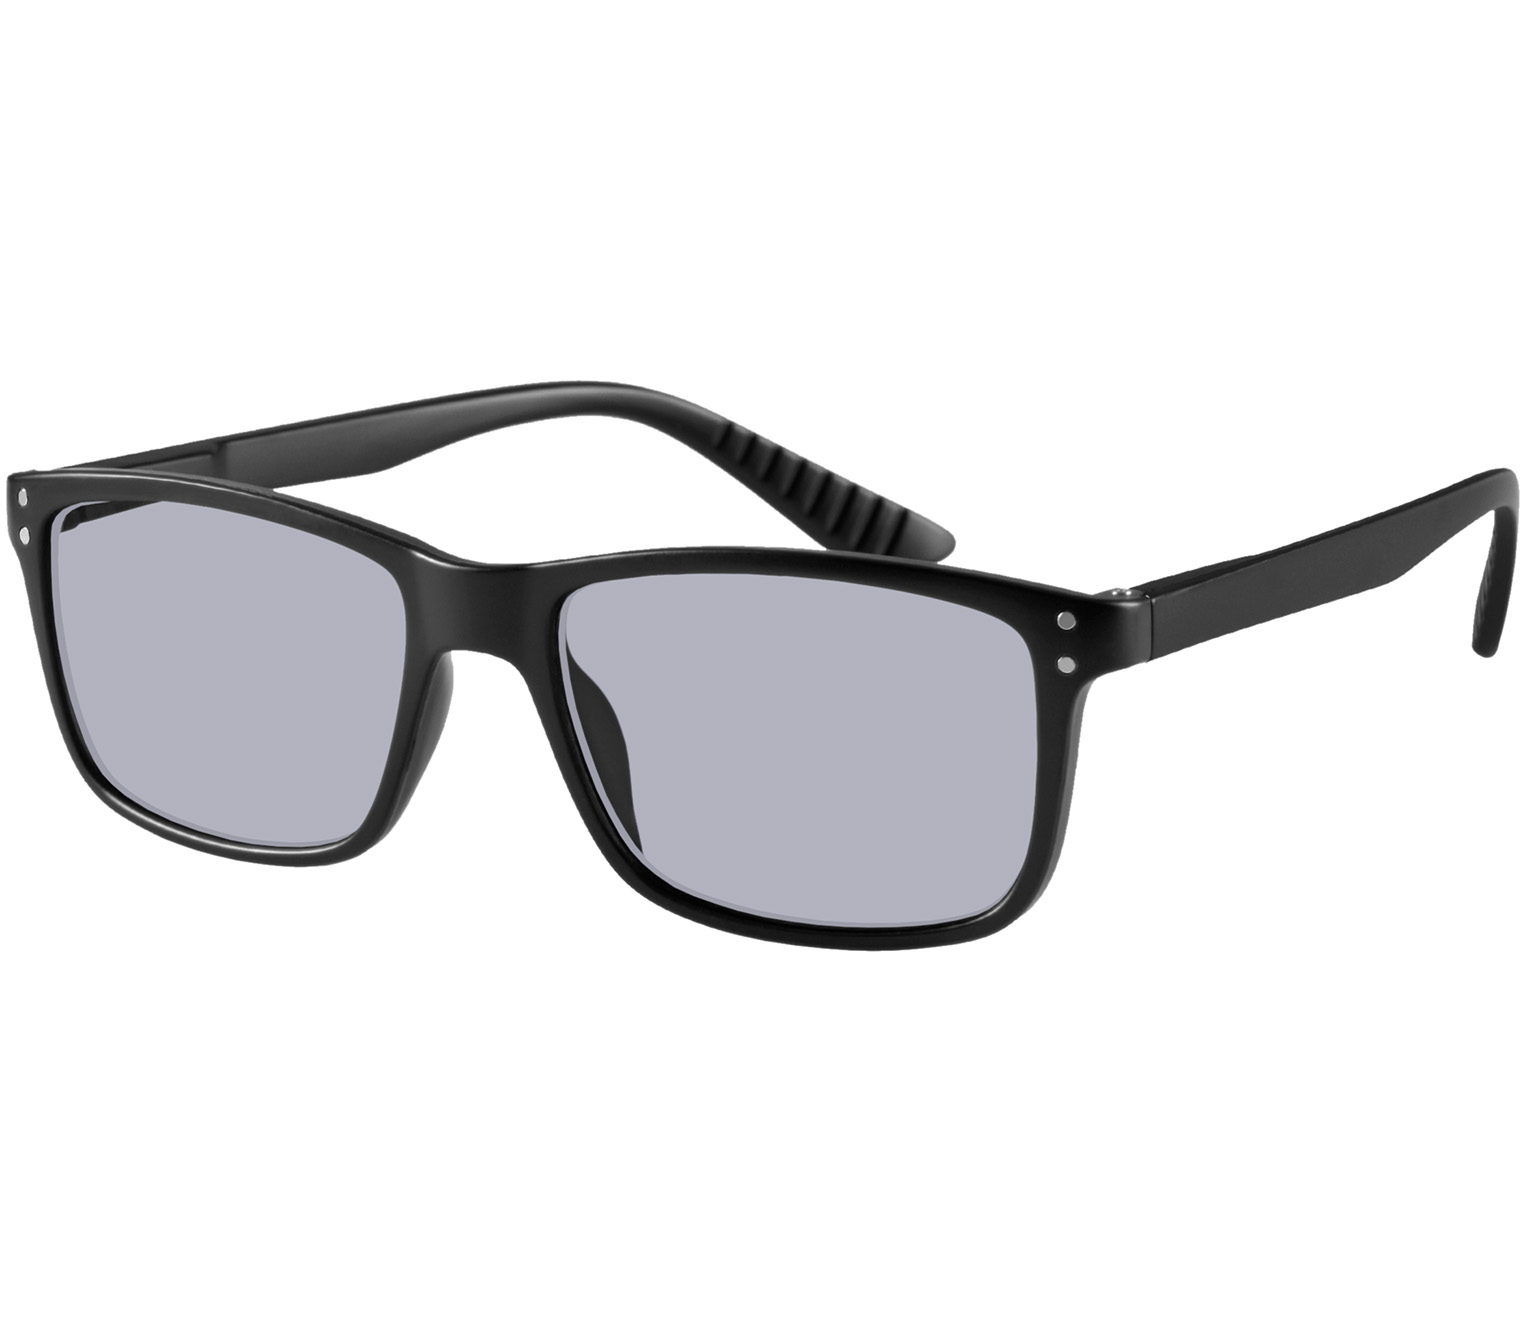 Main Image (Angle) - Lucca (Black) Sunglasses